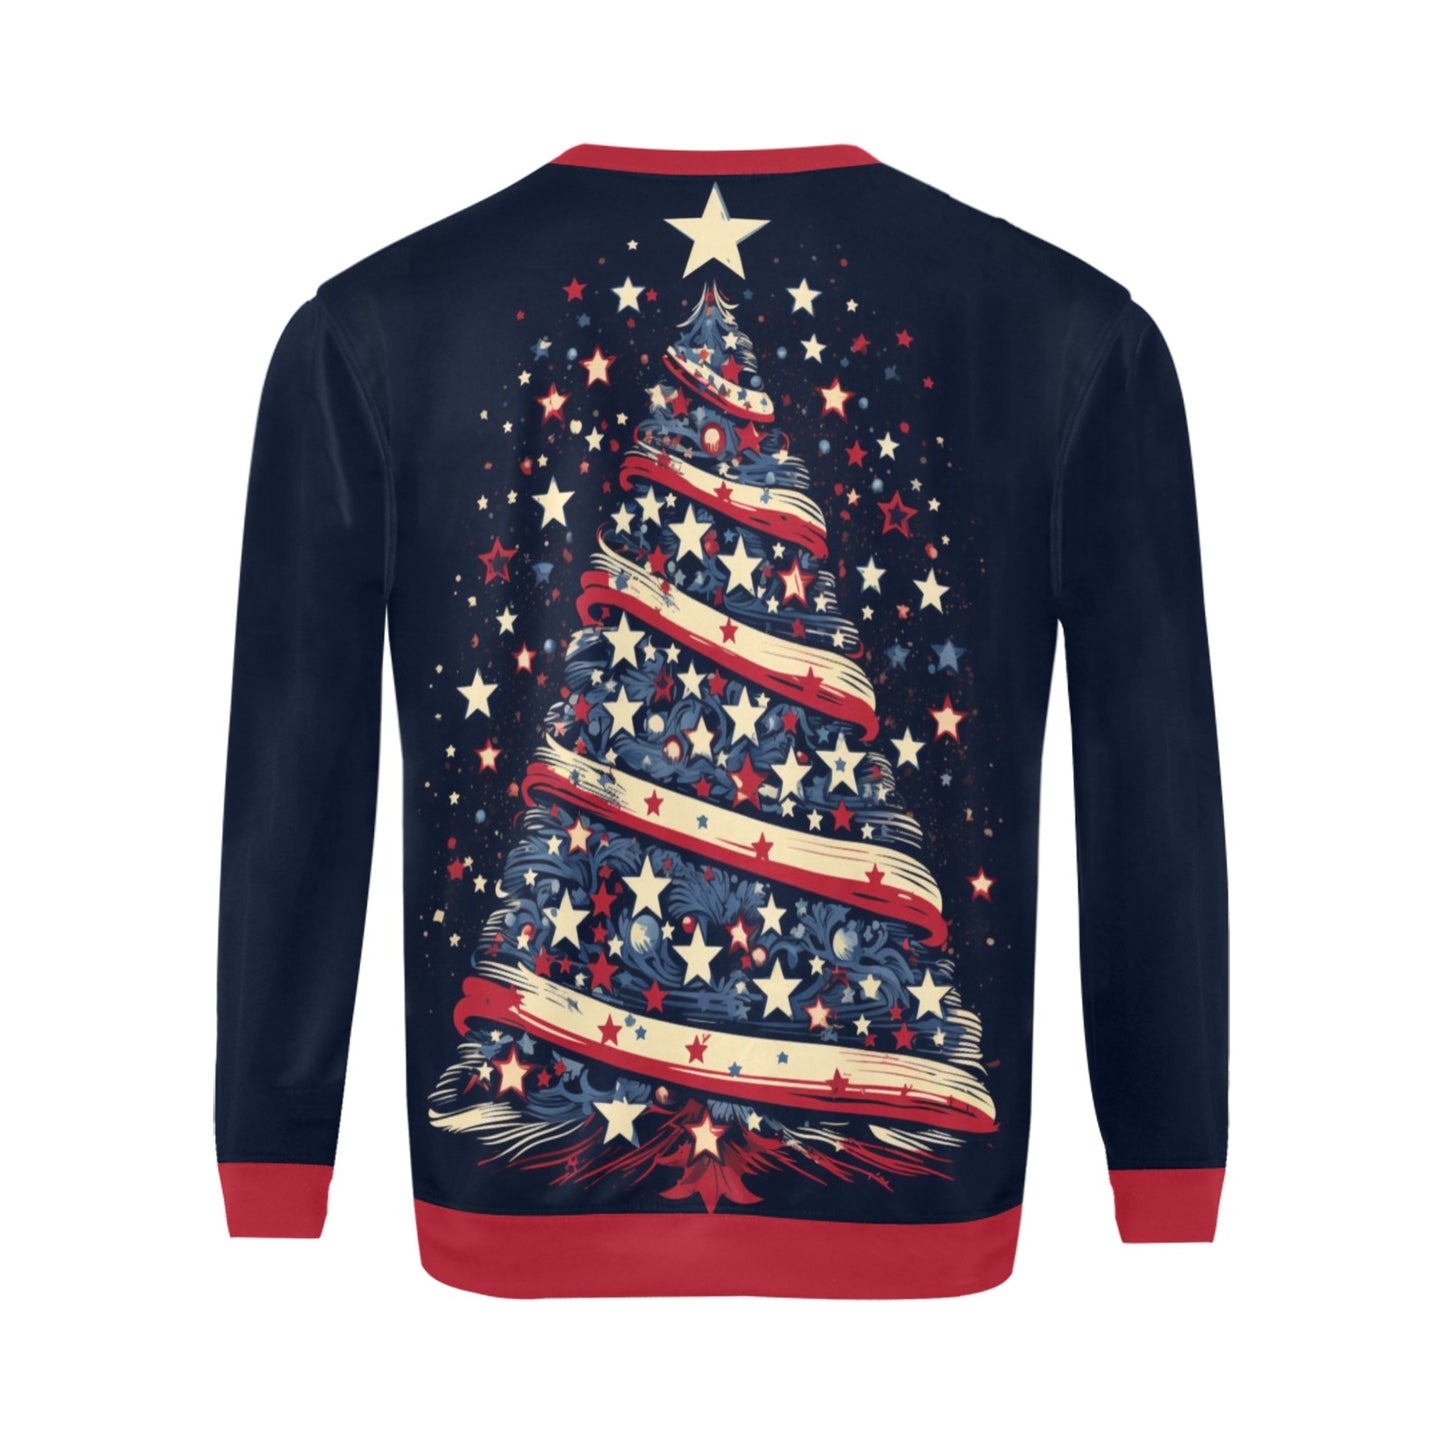 American Christmas Tree Ugly Sweater, Flag Red White Blue Xmas Print Women Men Retro Vintage Party Winter Holiday Plus Size Sweatshirt